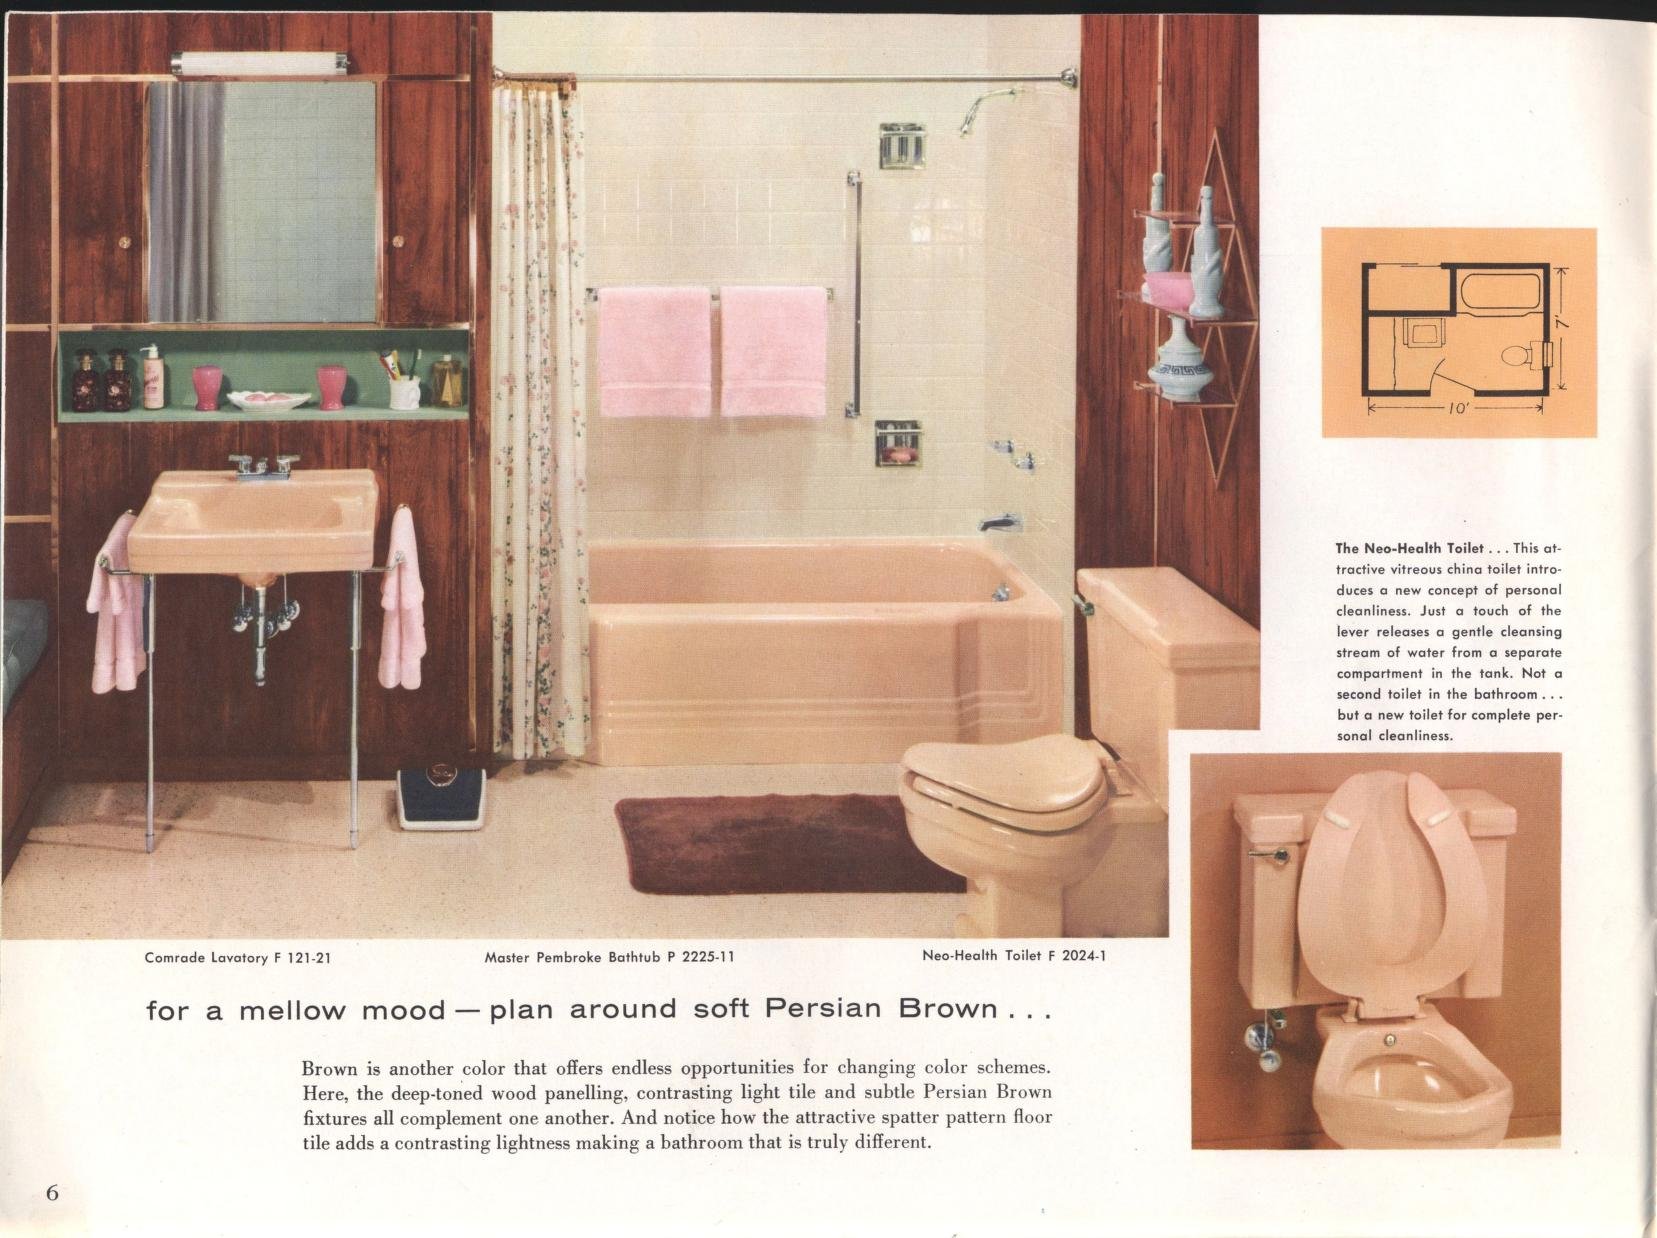 Planning Modern Bathroomsby American-Standard_0005.jpeg